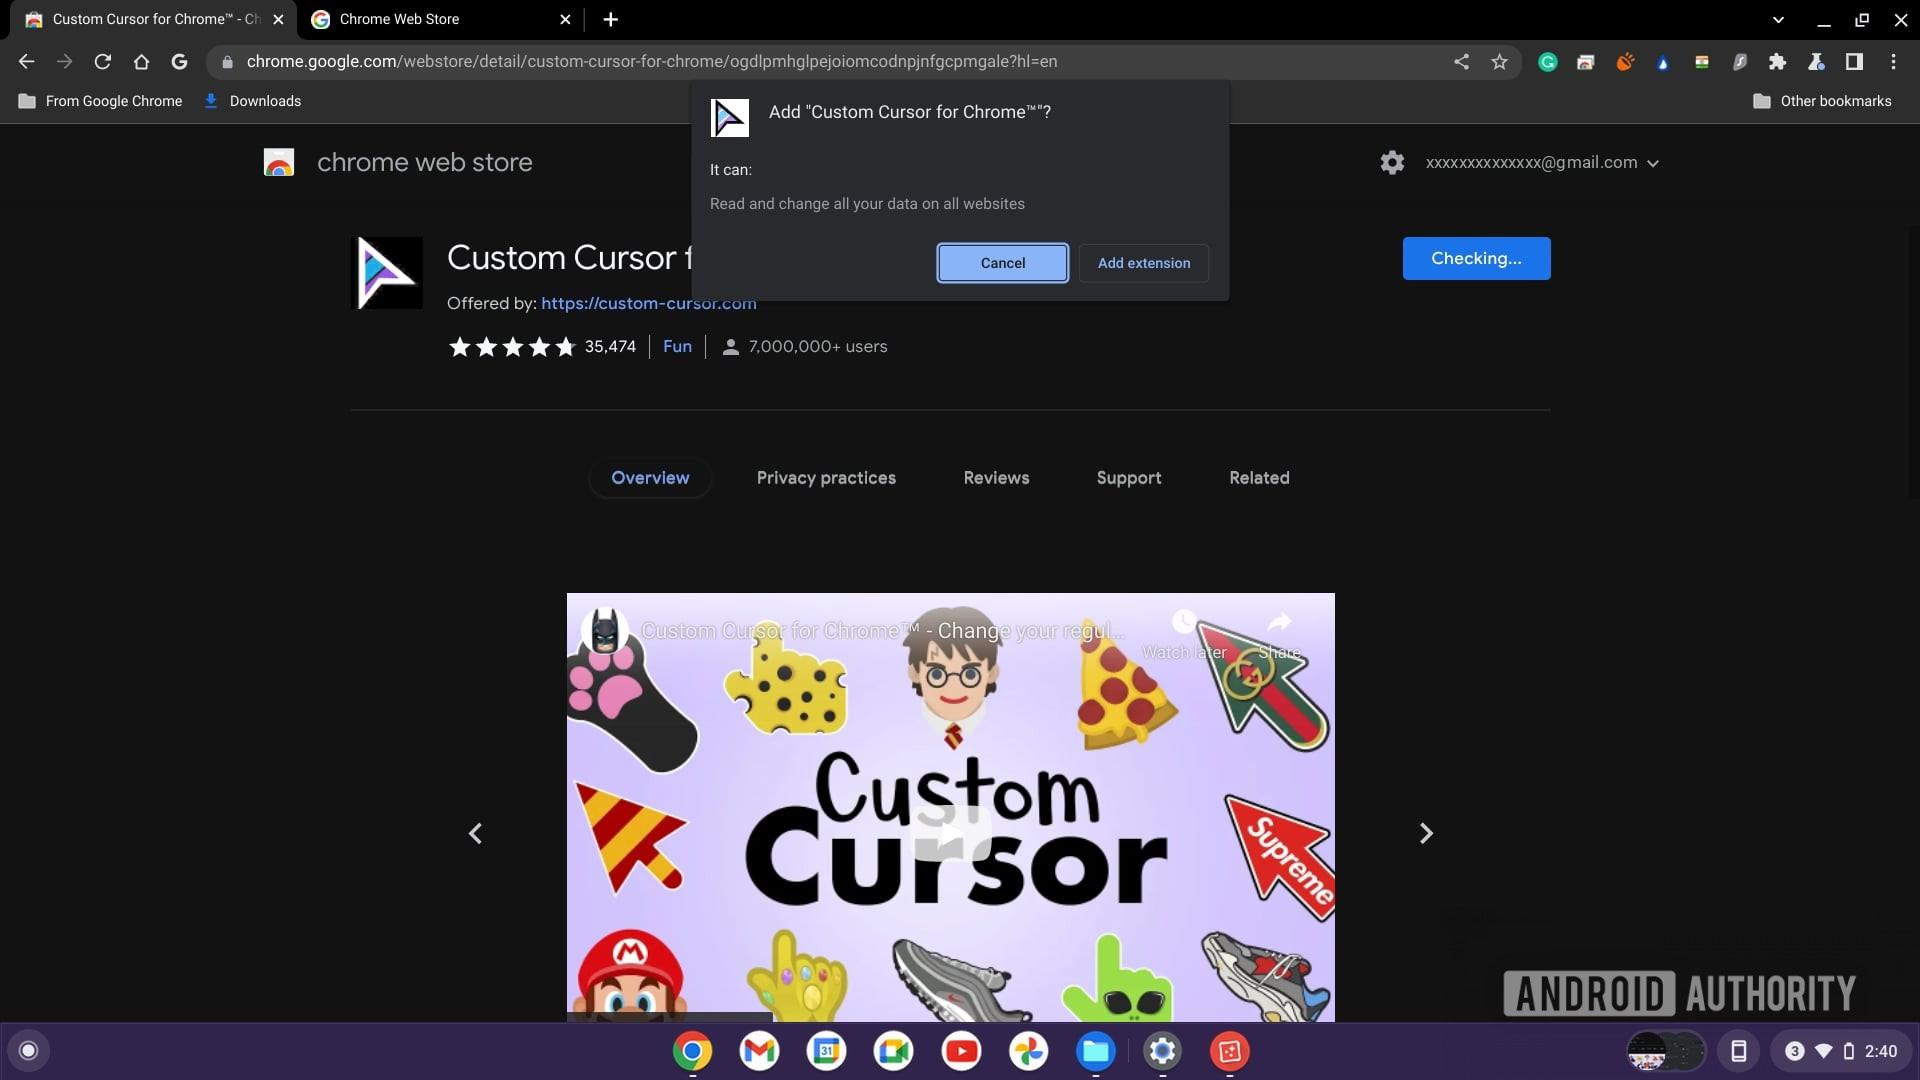 How to manage your cursors? - Custom Cursor